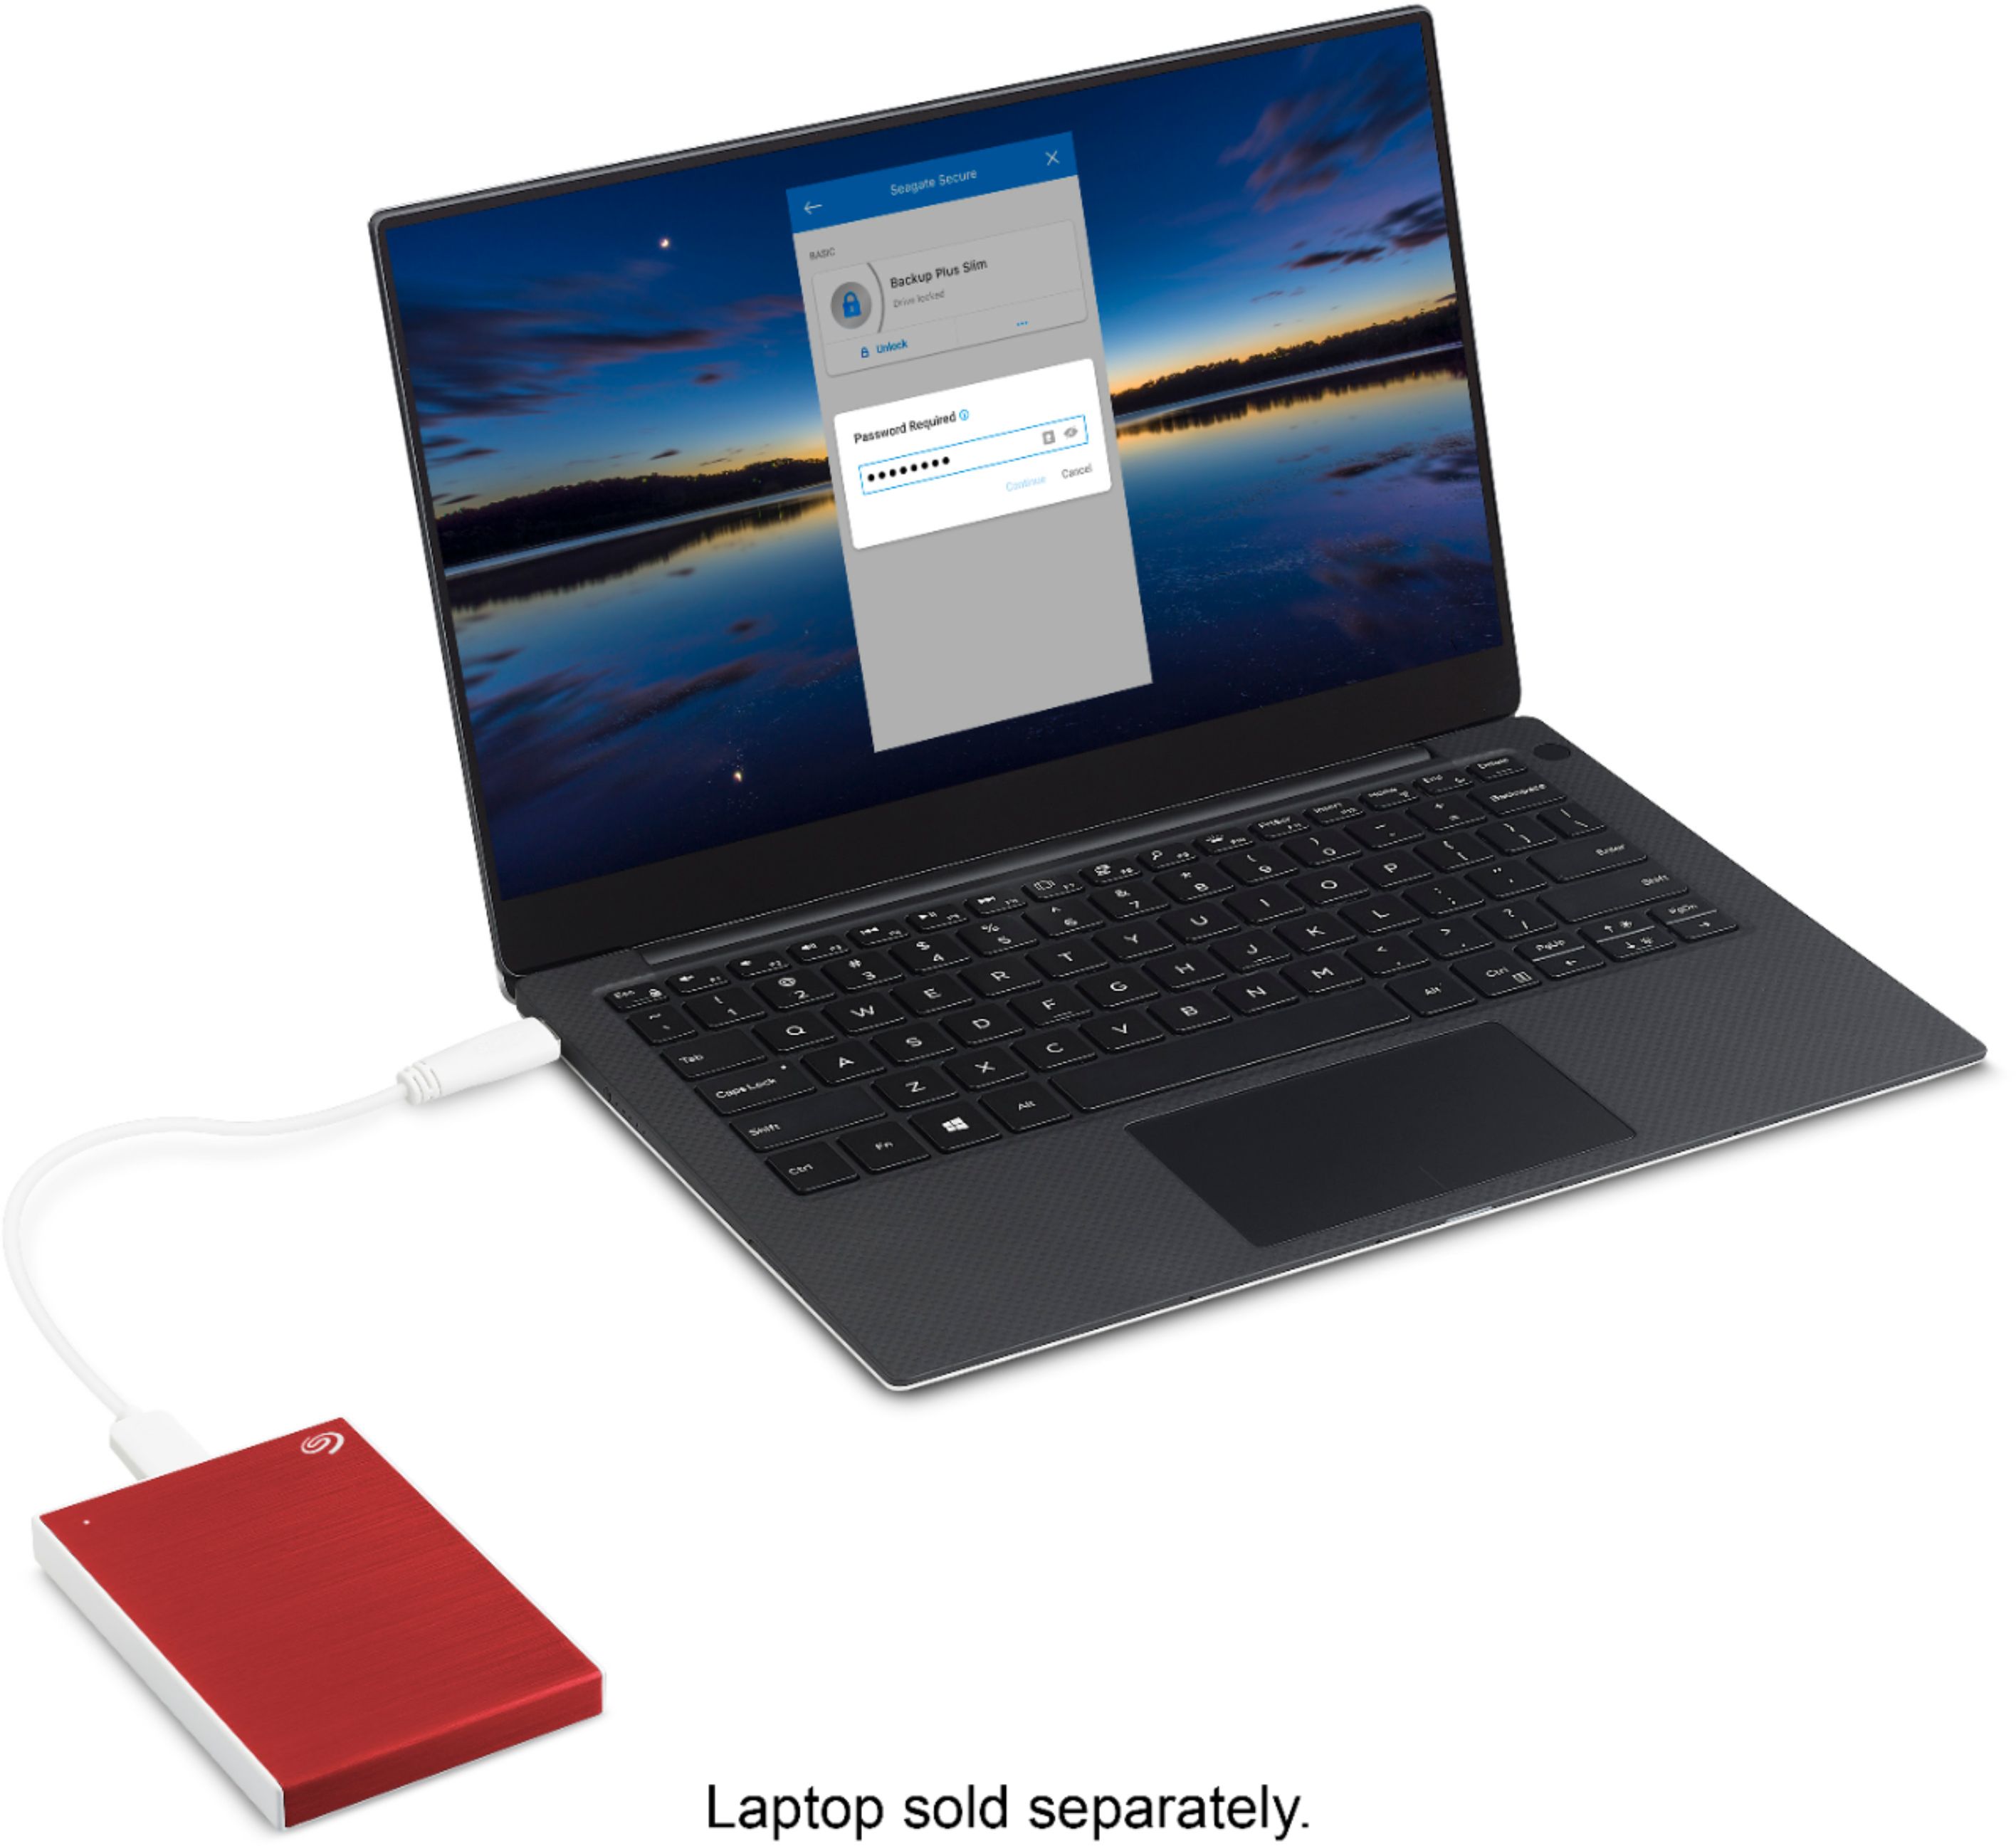 Laptop & Mac Modellnr.: STKB2000404 Space Grau inkl USB 3.0 2 Jahre Rescue Service Seagate One Touch tragbare externe Festplatte 2 TB PC